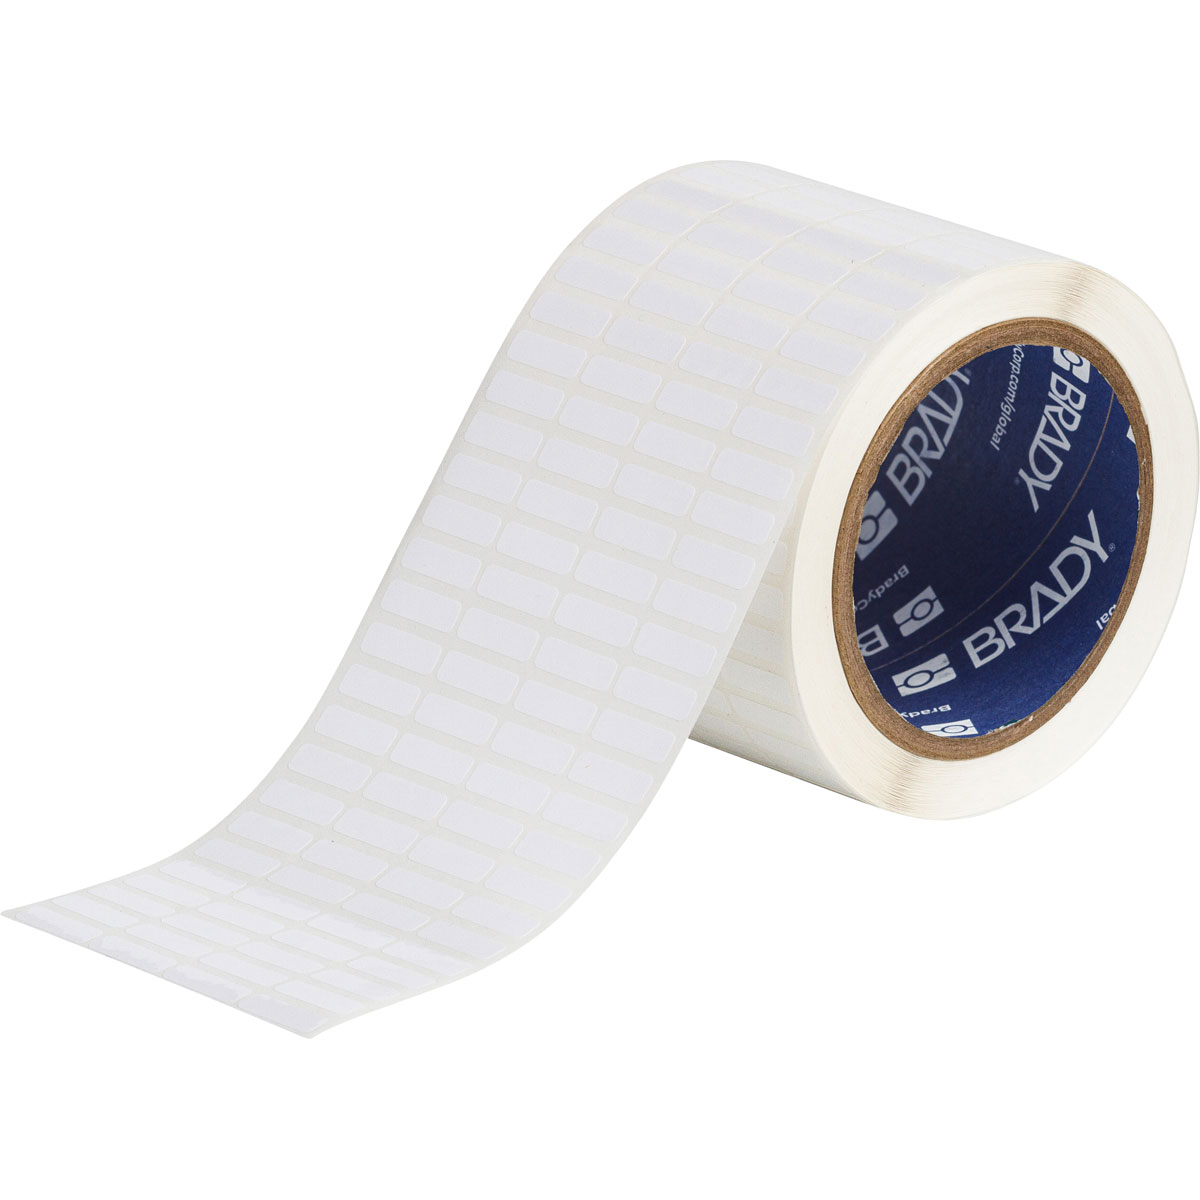 Gloss Finish White Thermal Transfer Printable Label B-423 Permanent Polyester Brady Worldwide Inc. Brady THT-43-423-10 1.25 Width x 0.25 Height 10000 per Roll 